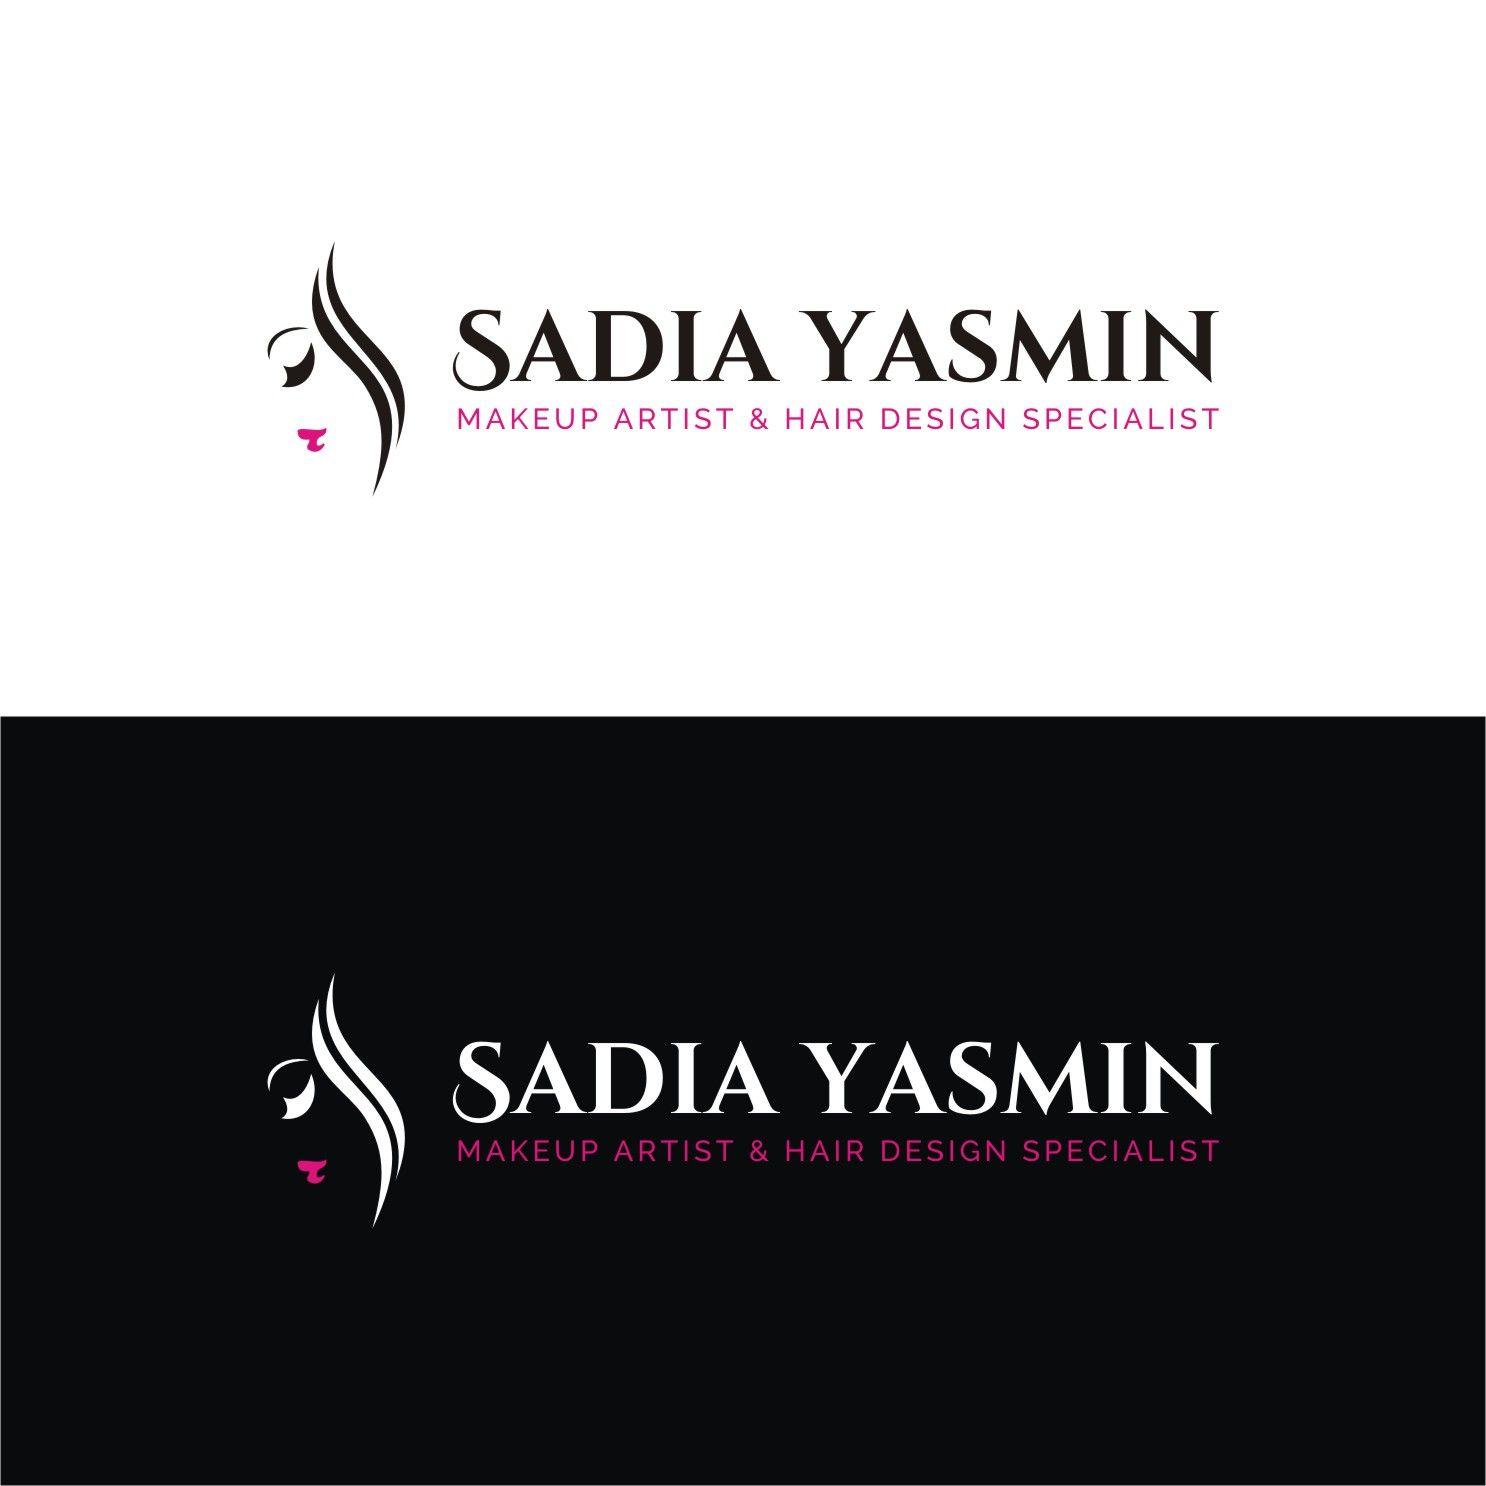 Specialist Makeup Artist Logo - Feminine, Elegant, Makeup Logo Design for Sadia Yasmin by Sushma ...